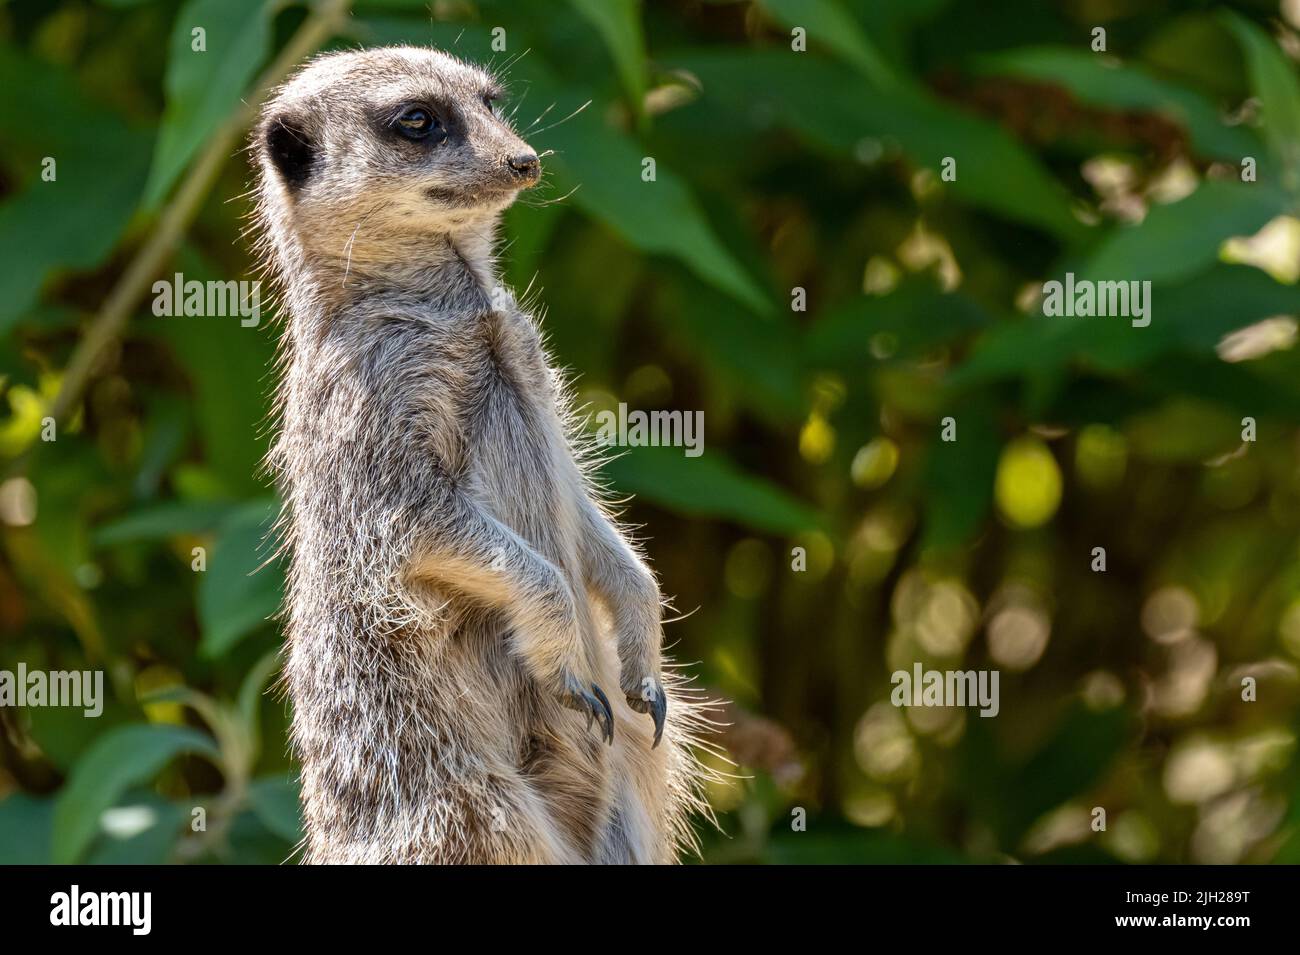 A single isolated close-up portrait of an alert Meerkat, Suricata suricatta. Stock Photo